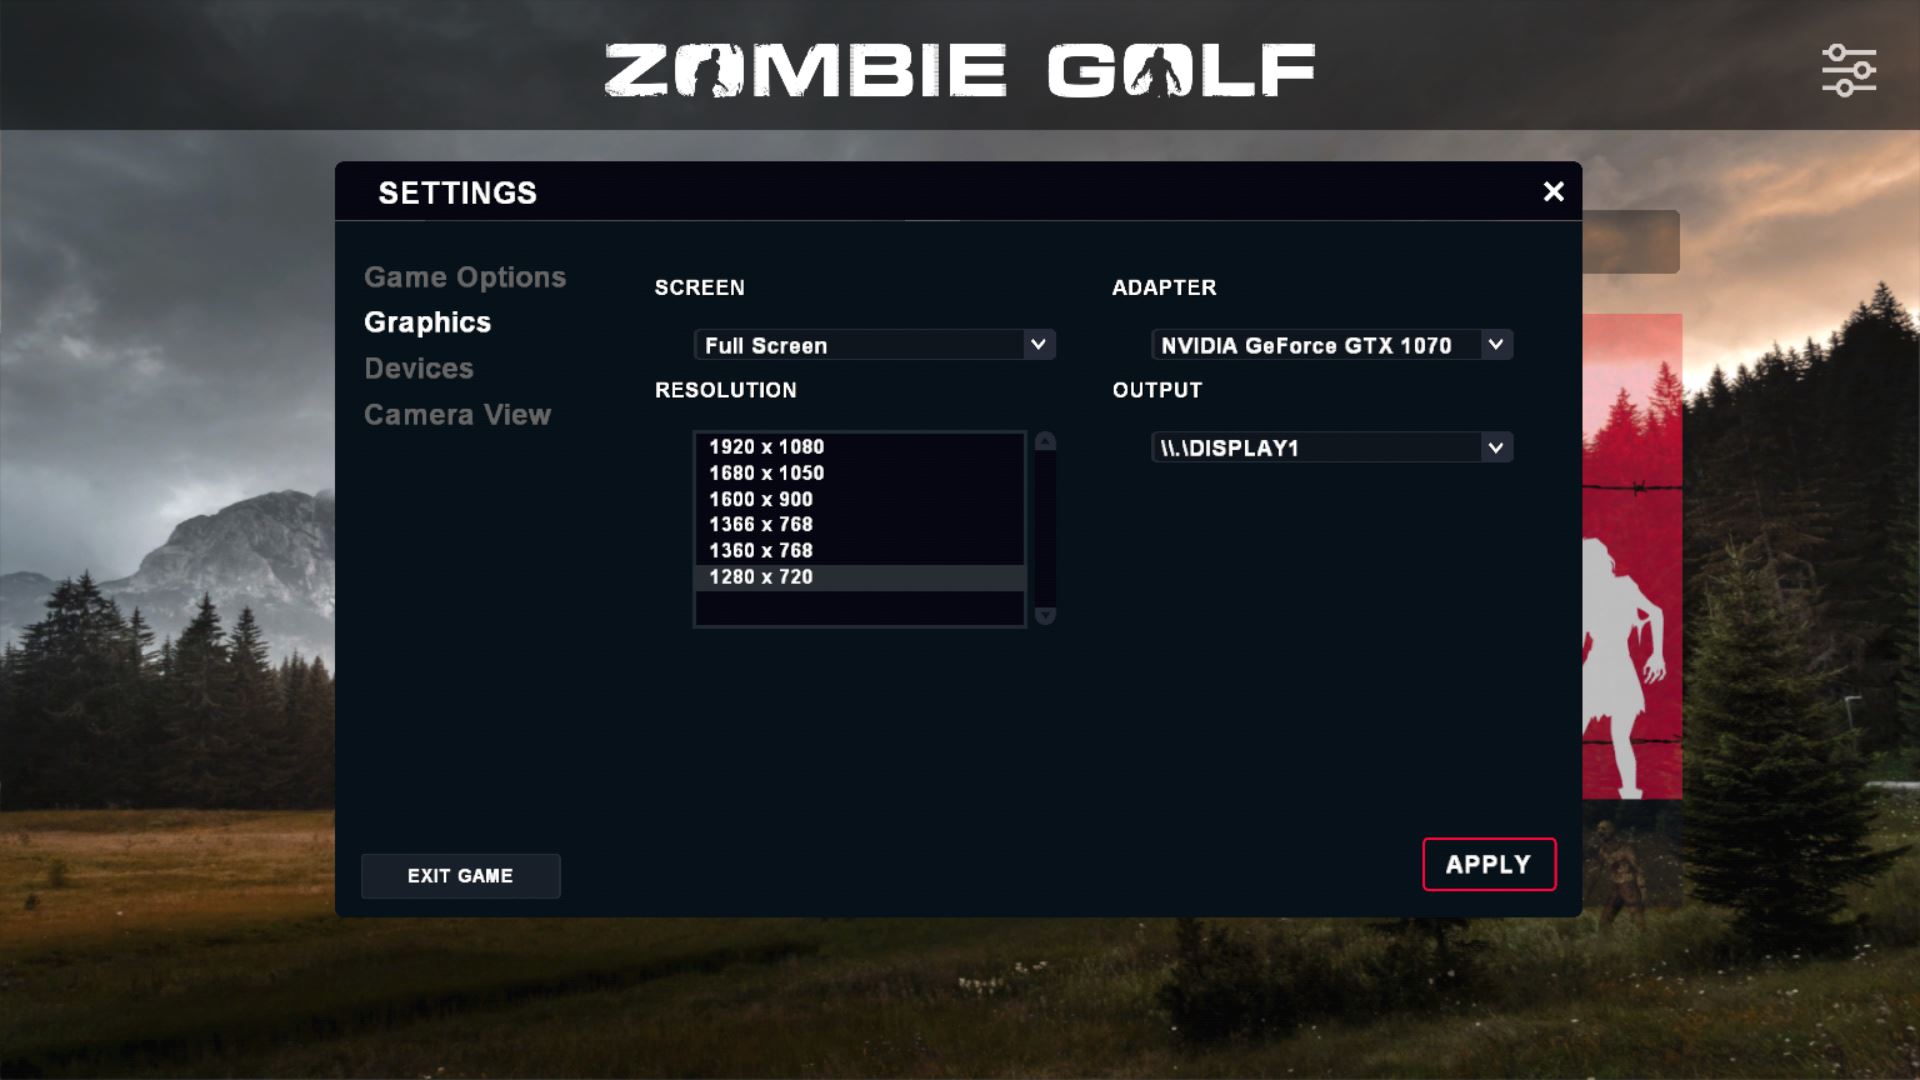 Zombie Golf Settings - Graphics